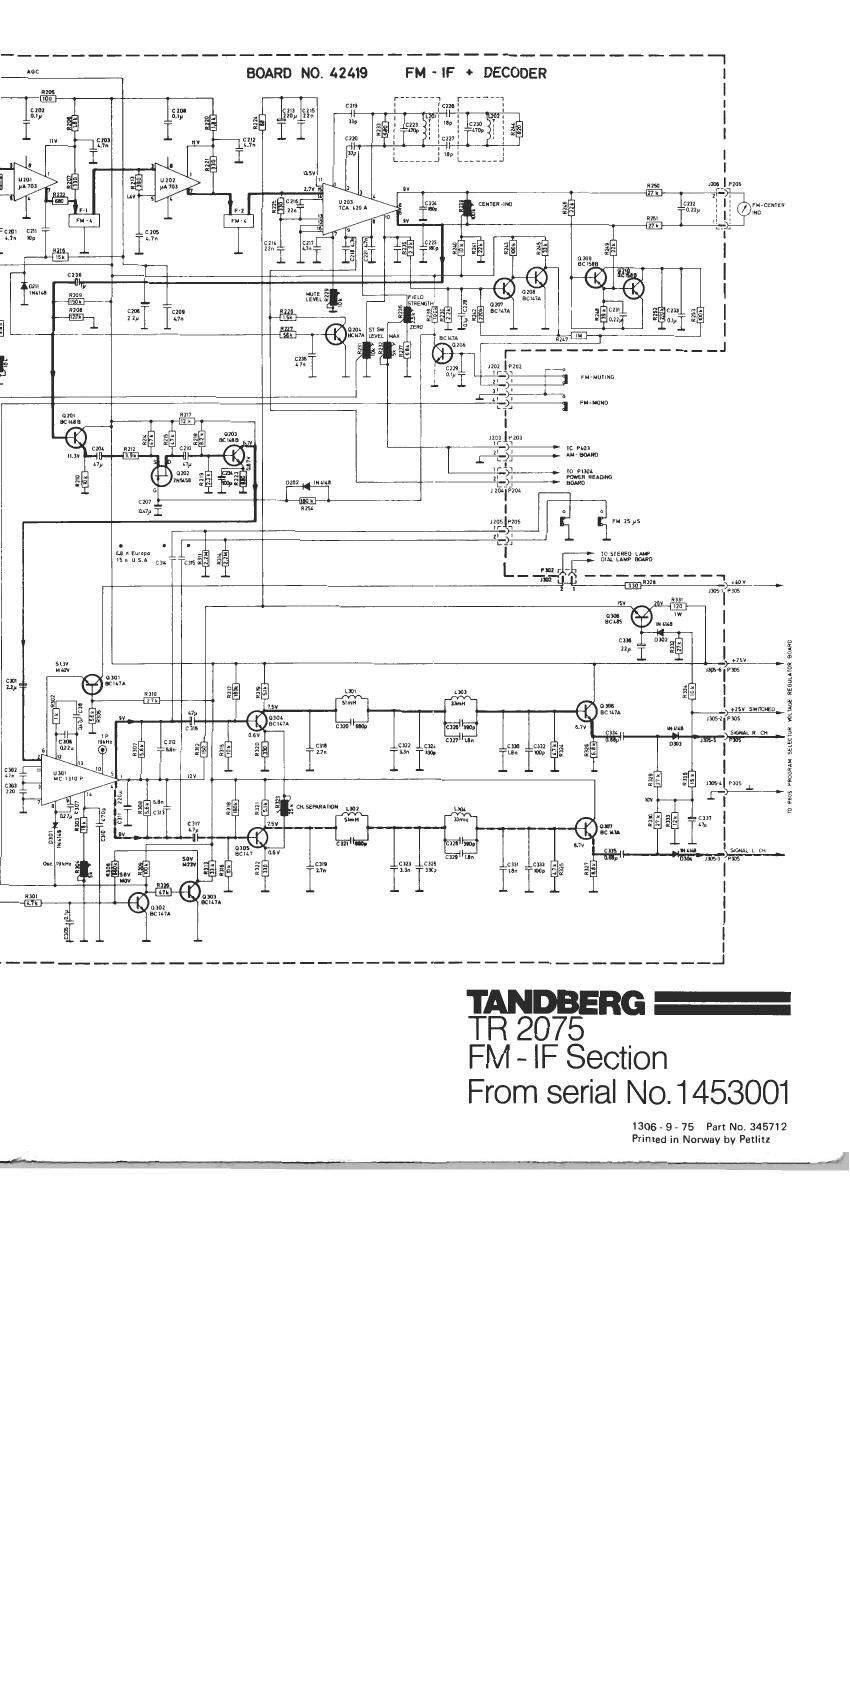 Tandberg TR 2075 Service Manual 2